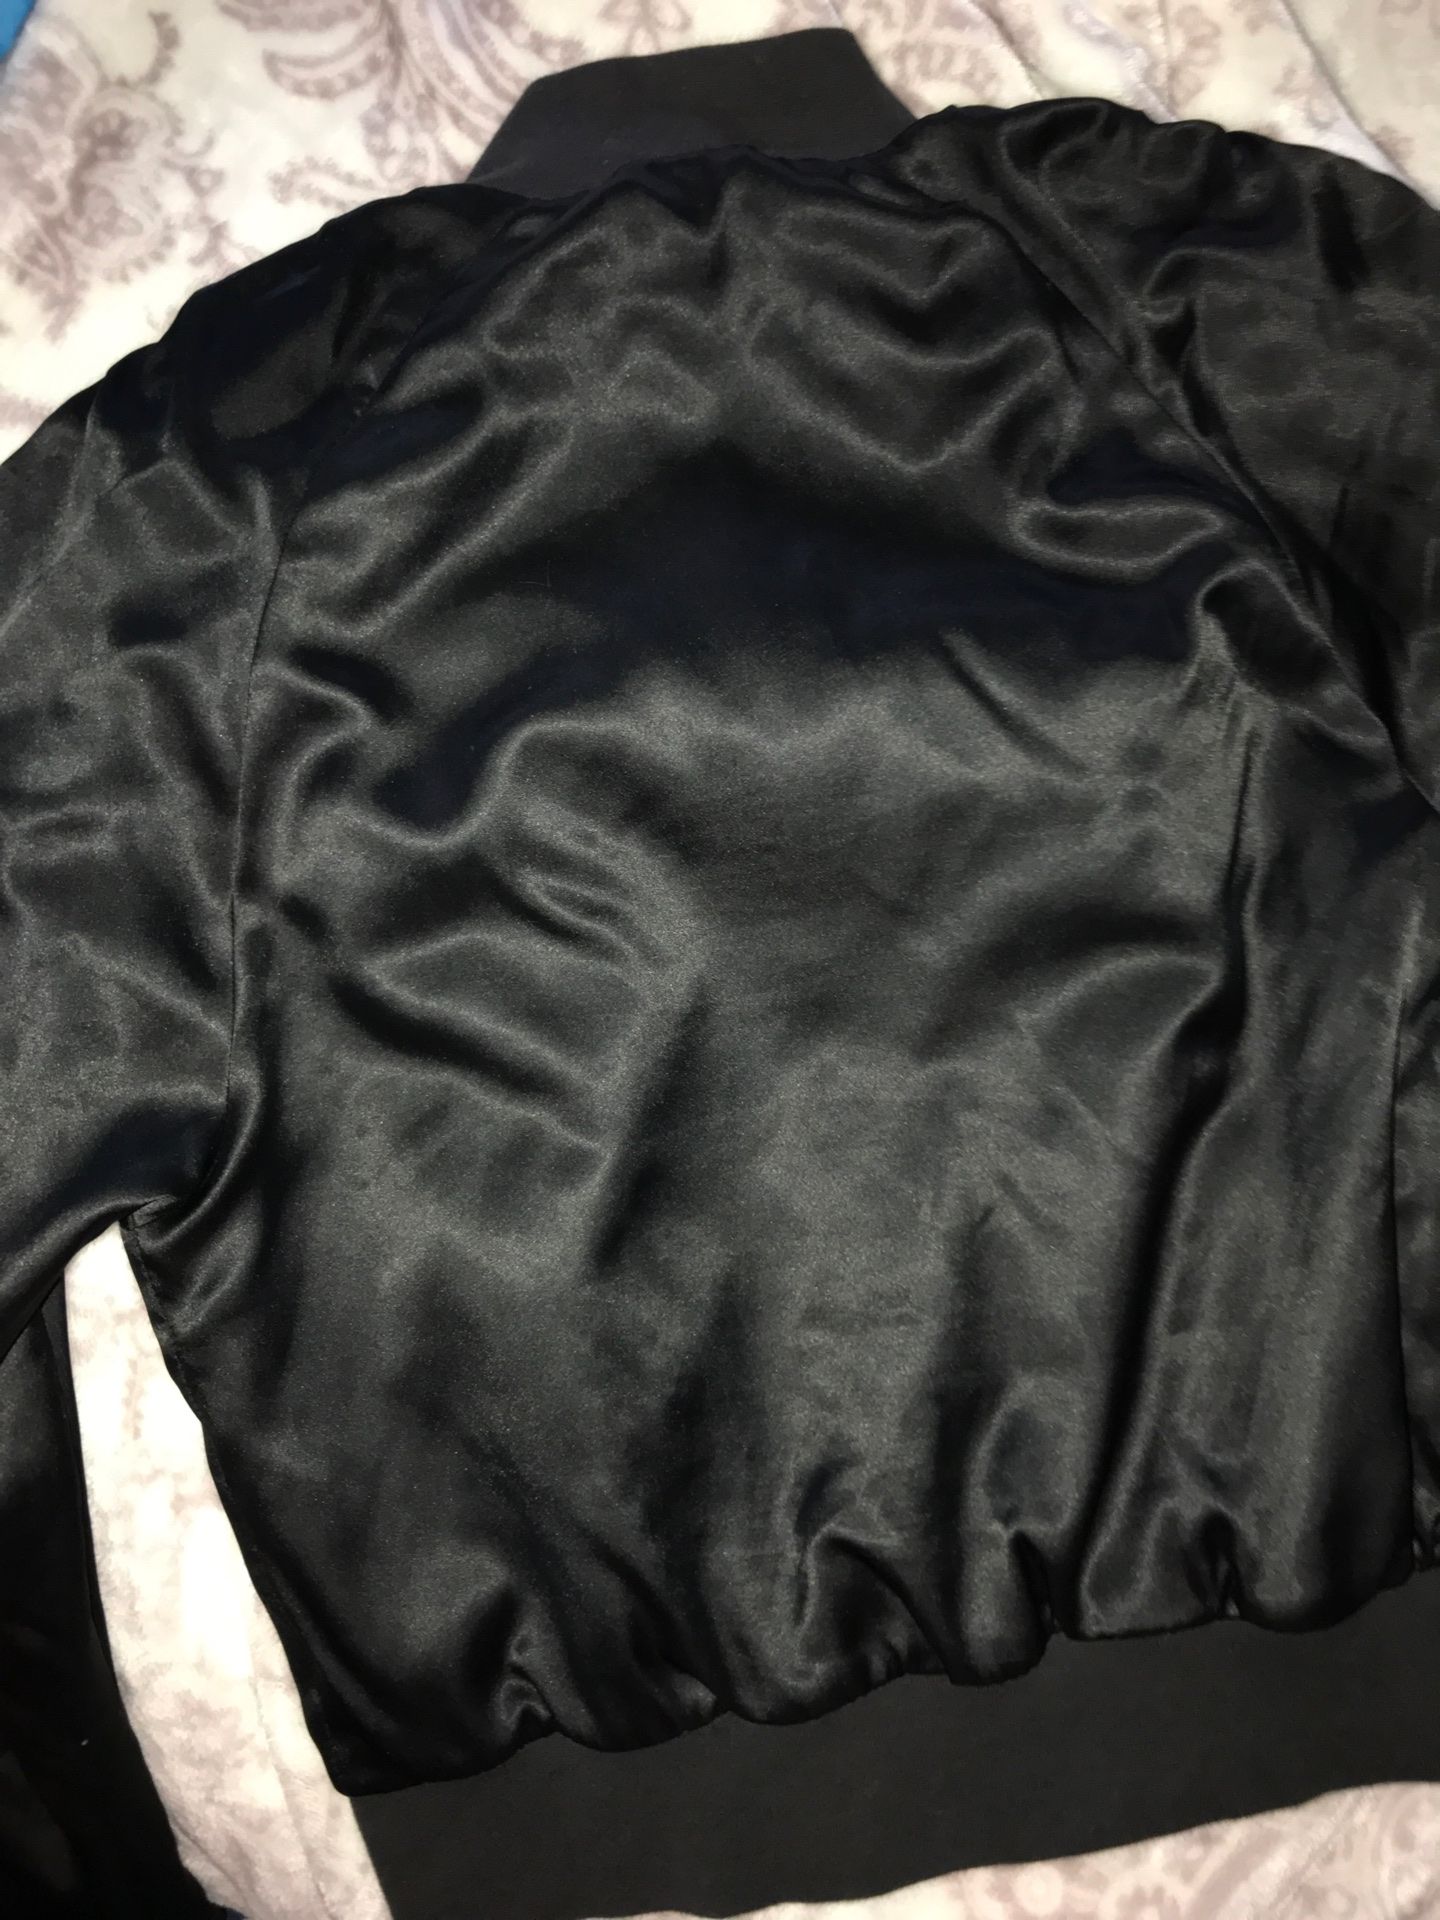 Satin VS Victoria Secret bomber jacket